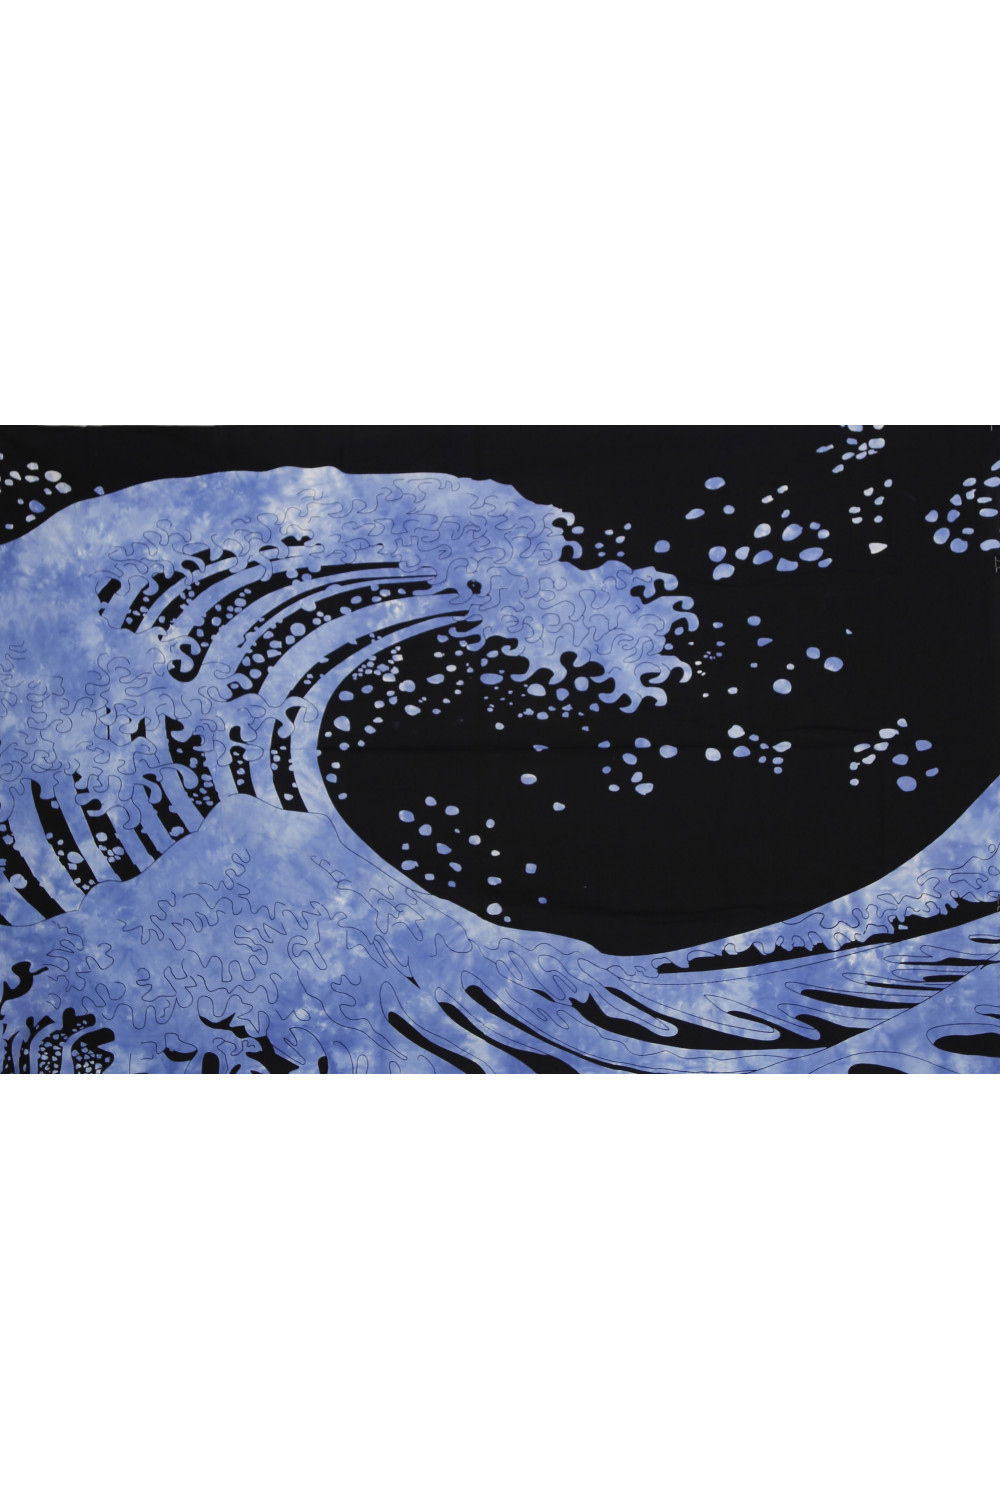 Zest For Life Ocean Wave Tapestry Blue Tie Dye 52x80"